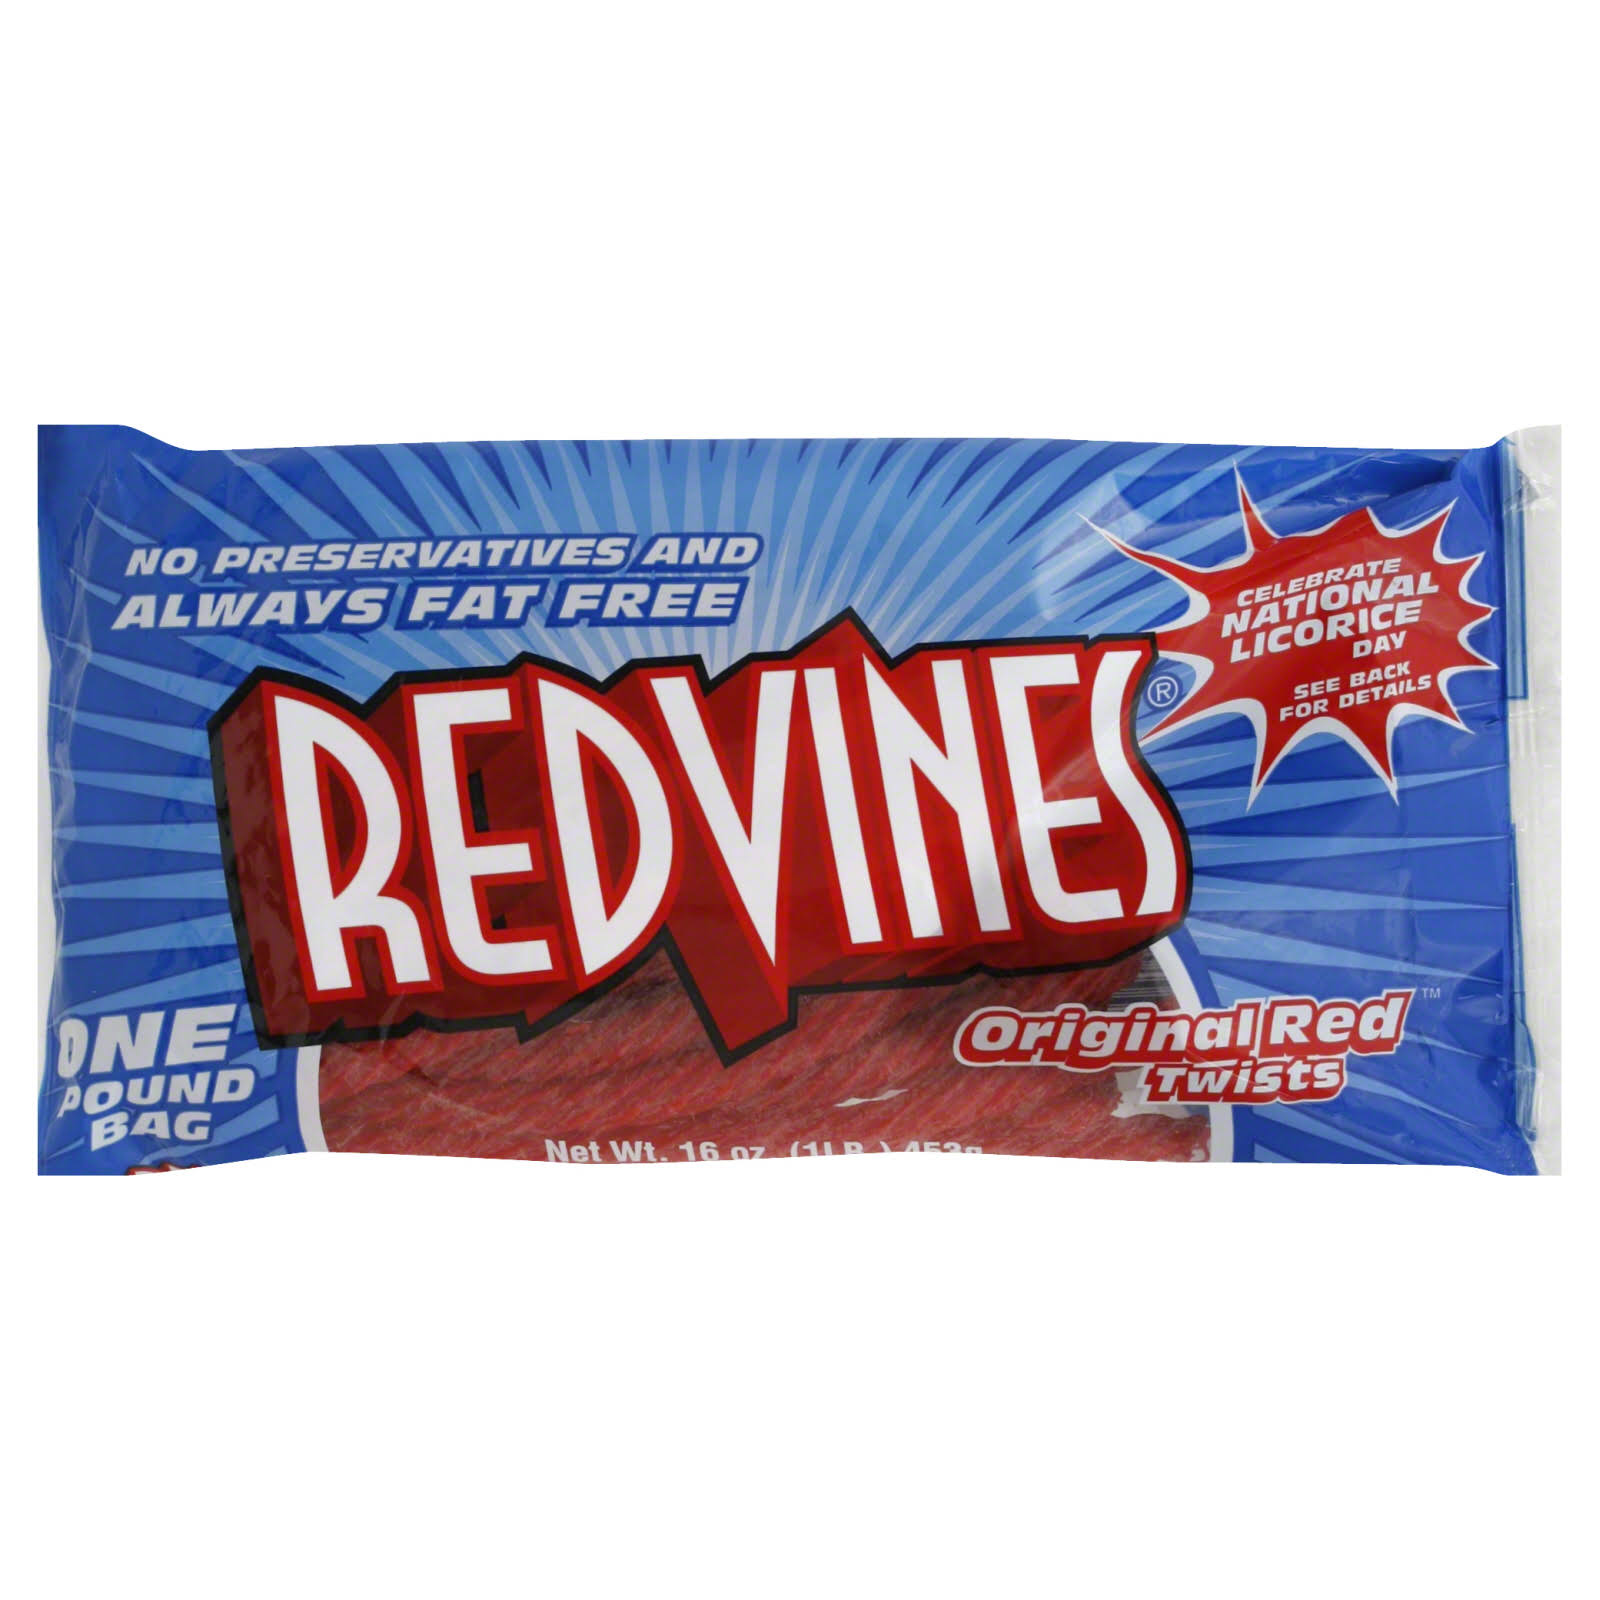 Red Vines Licorice Twists Candy - Original Red Twists, 16oz